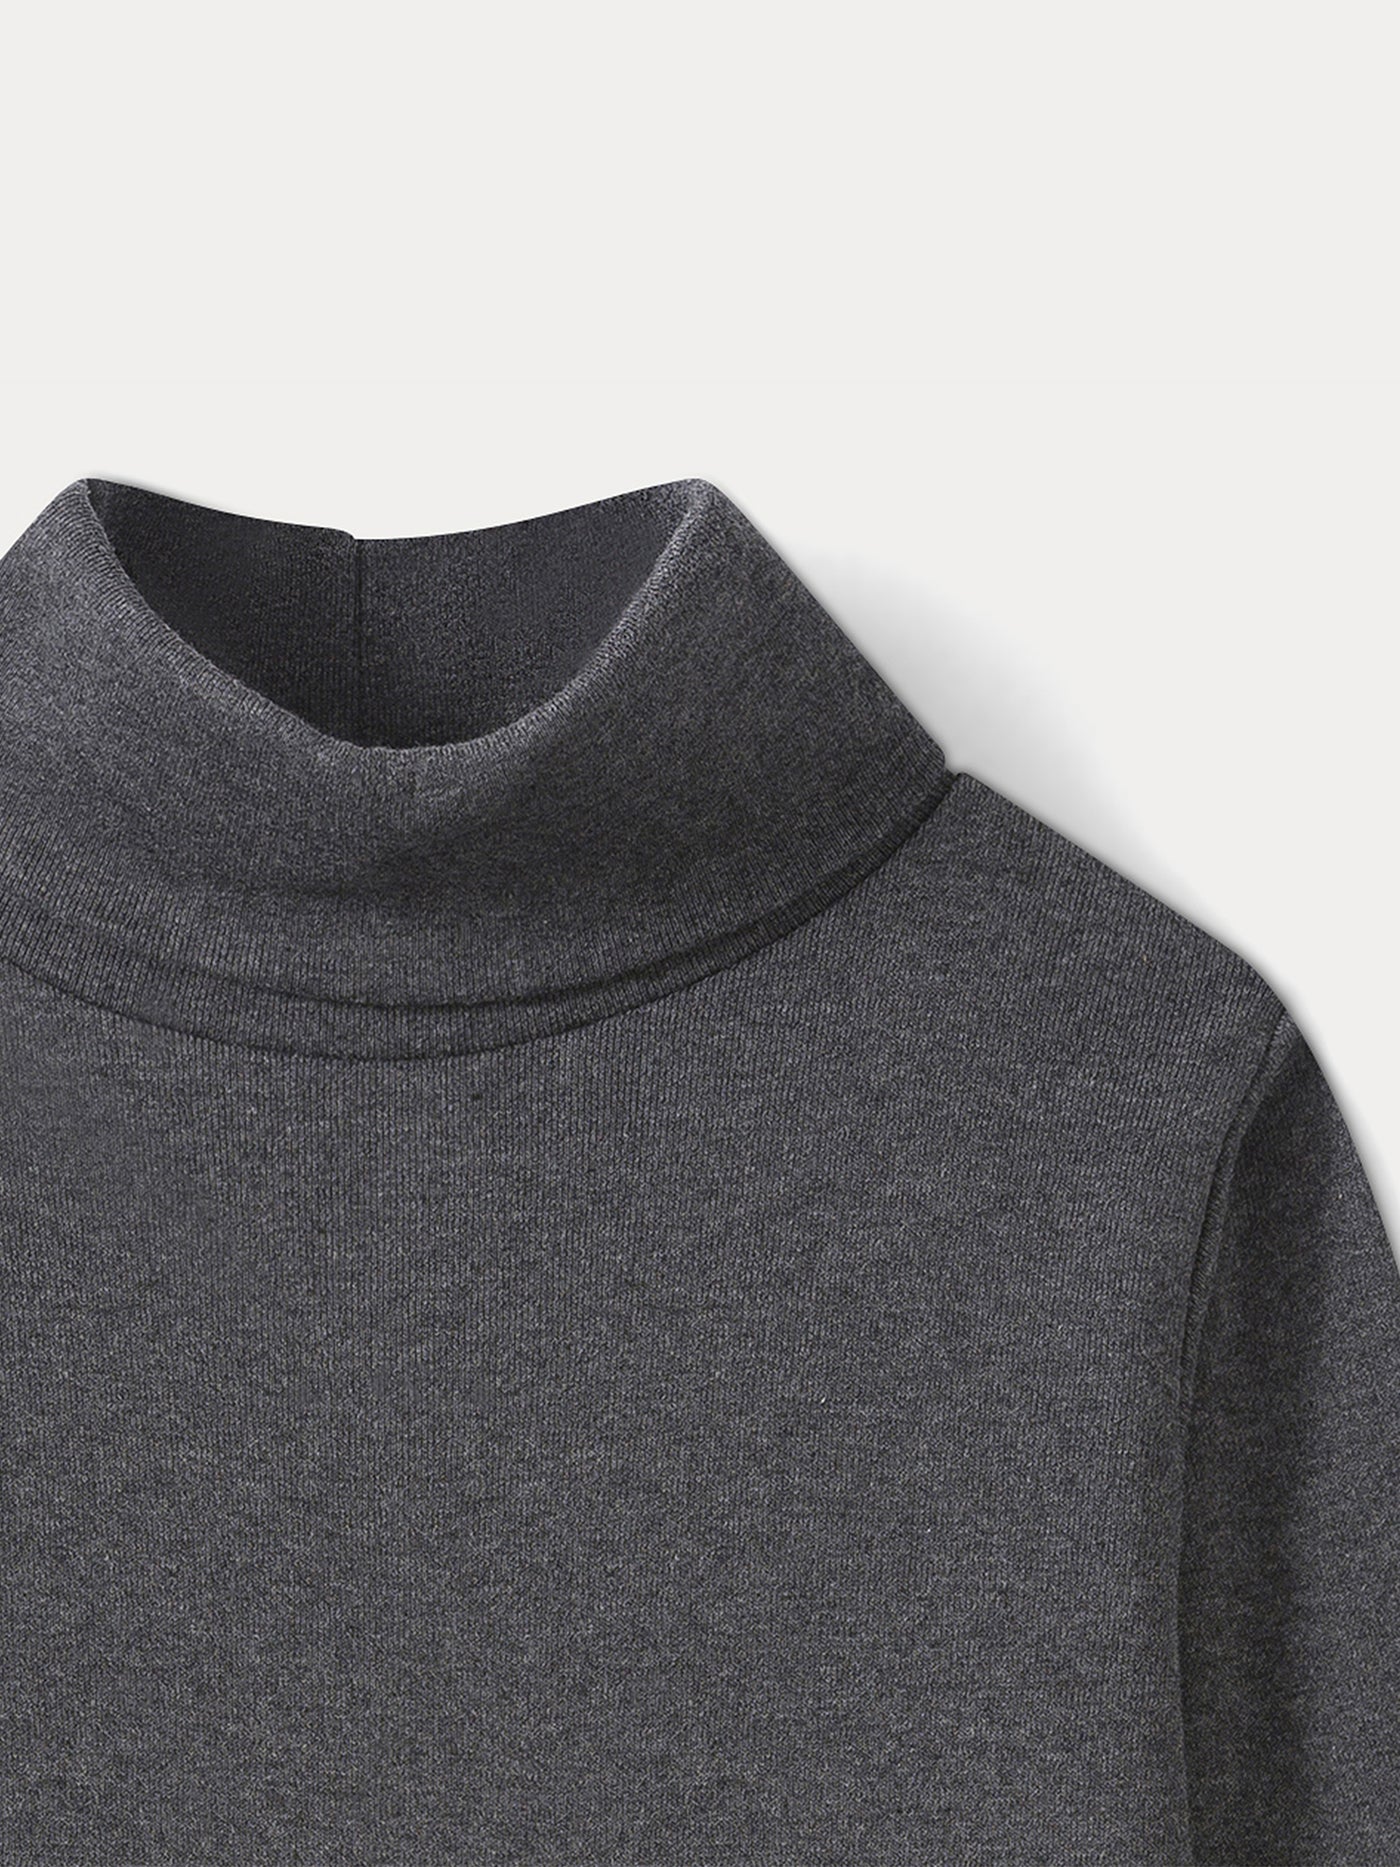 Thin turtleneck sweater dark heathered gray